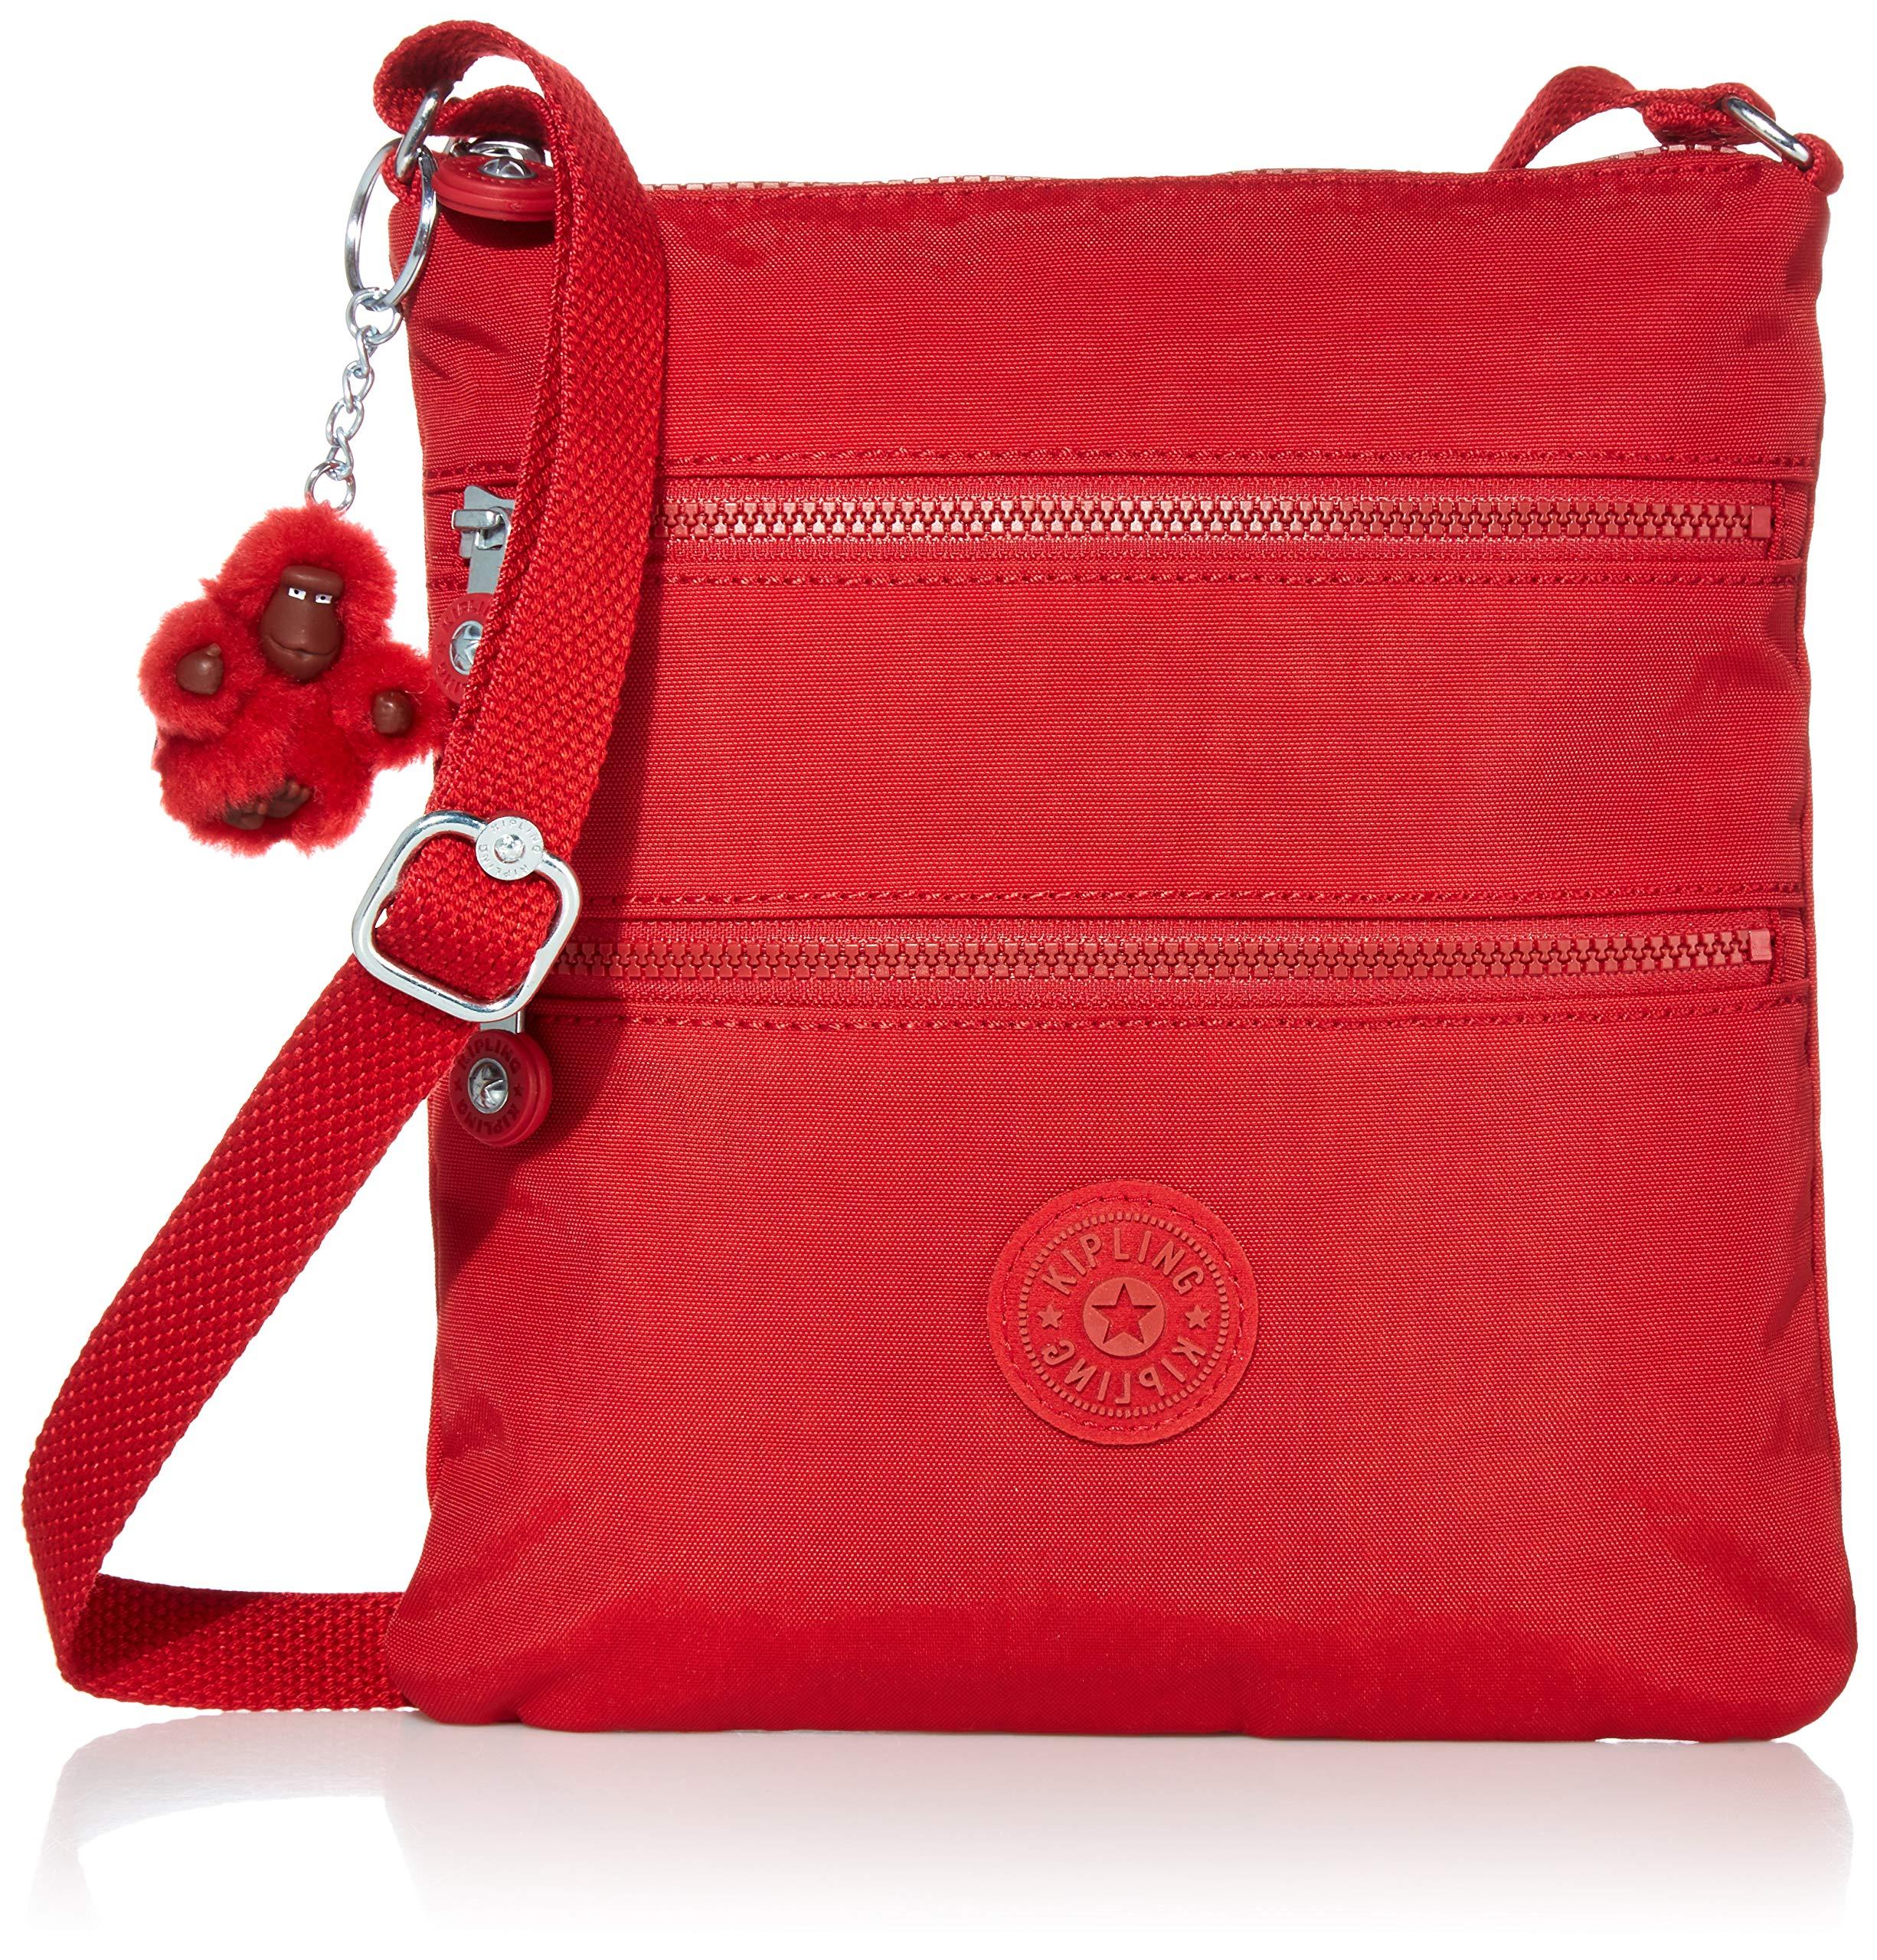 Kipling Synthetic Keiko Crossbody Bag in Red - Lyst